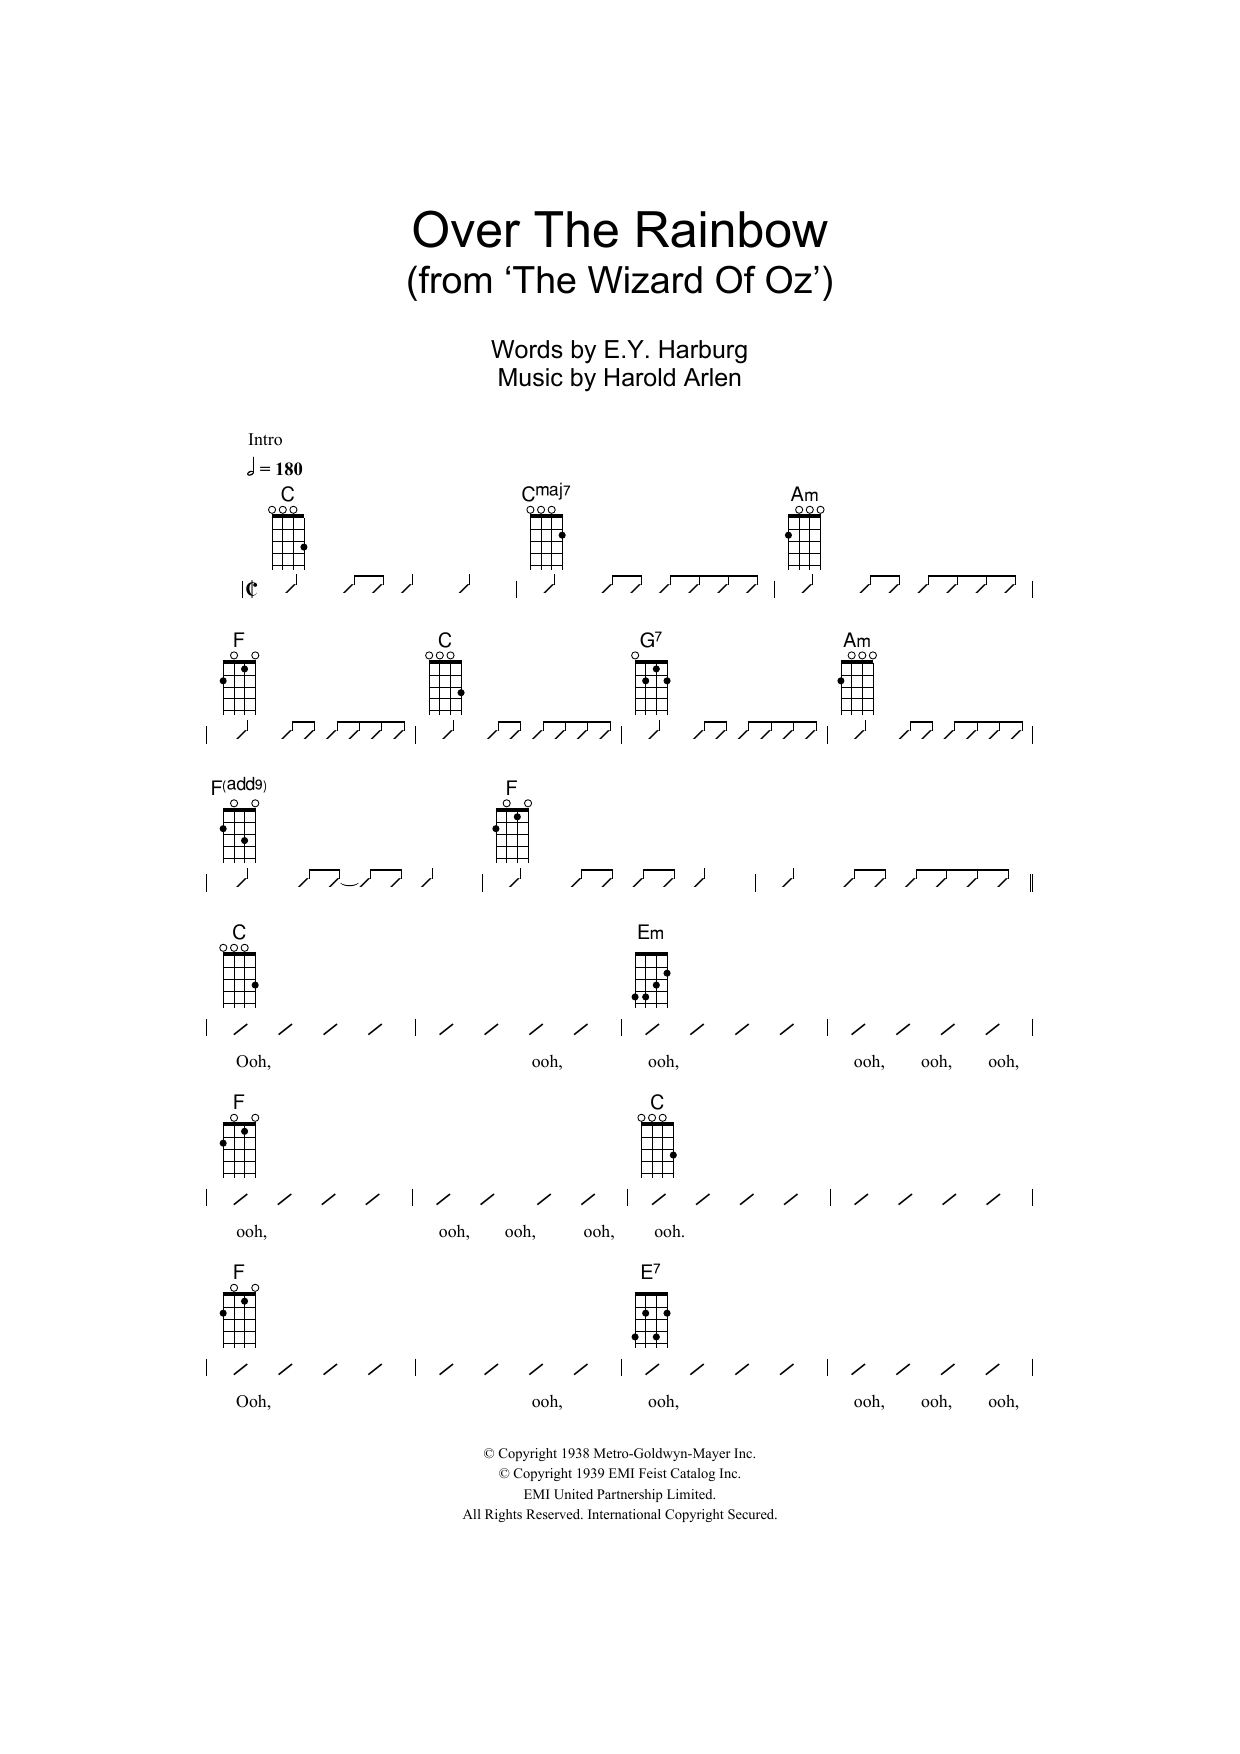 The Ukuleles Over The Rainbow (from 'The Wizard Of Oz') sheet music notes and chords arranged for Ukulele Chords/Lyrics